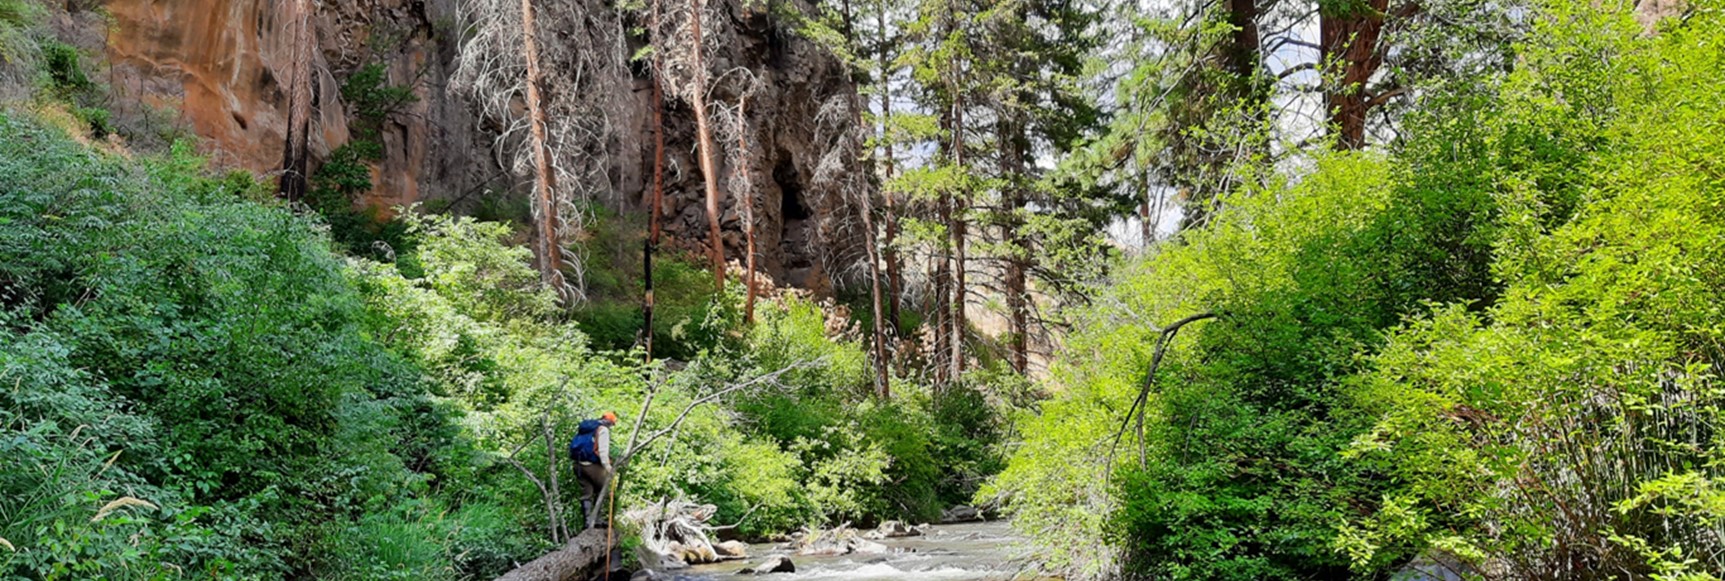 A surveyor traverses a log in Whychus Basin Canyon